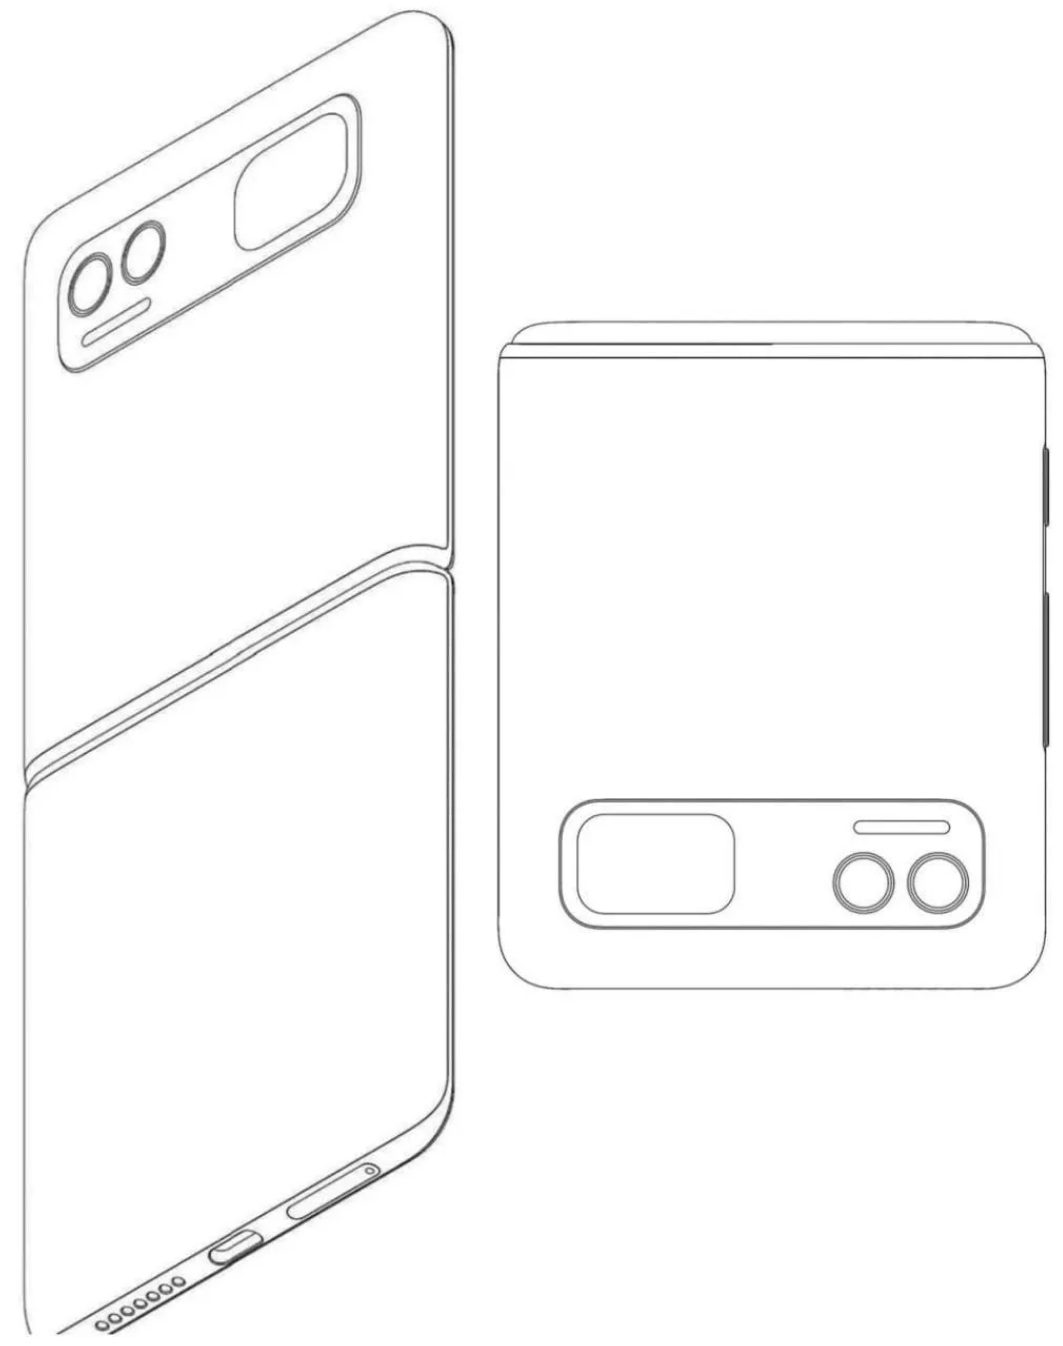 Xiaomi подала патент на флип-смартфон: дизайн и ожидаемые спецификации